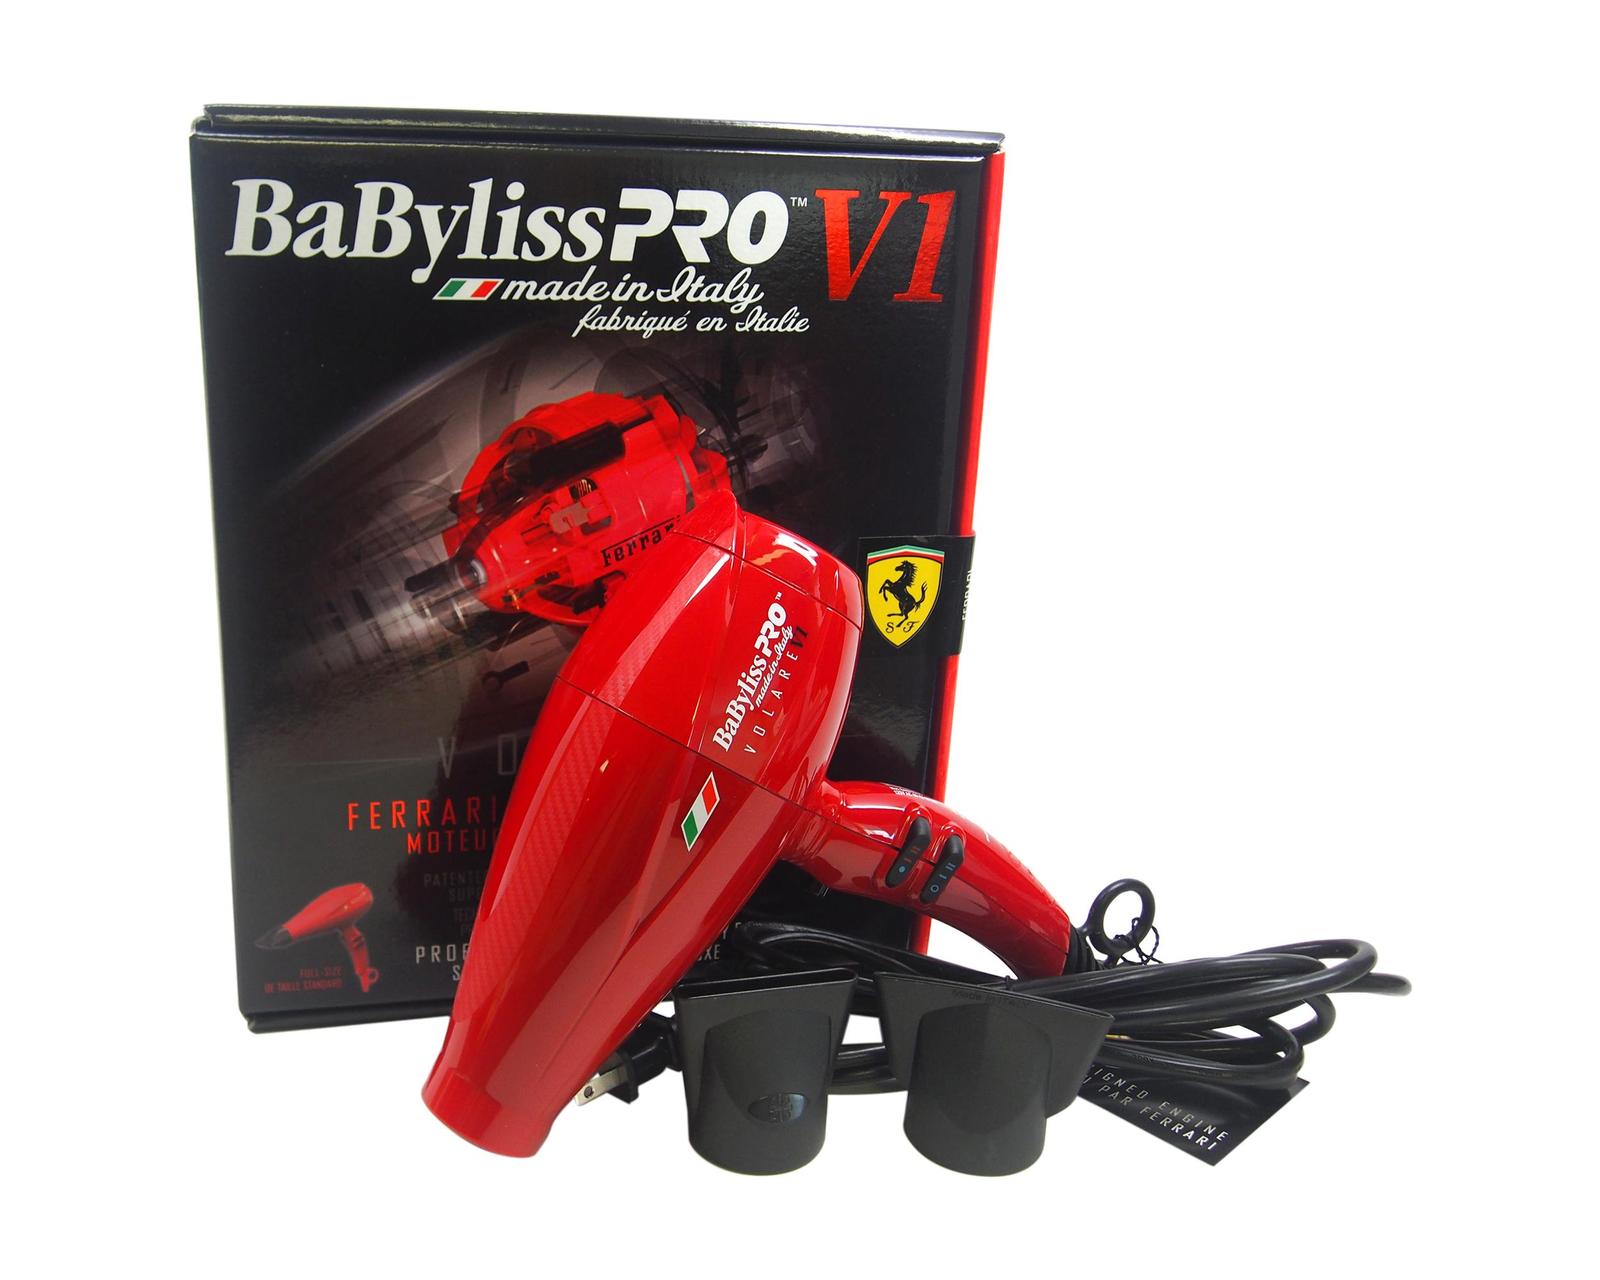 Babyliss ferrari. BABYLISS Ferrari фен. BABYLISS Ferrari фен красный. BABYLISS Pro Ferrari.